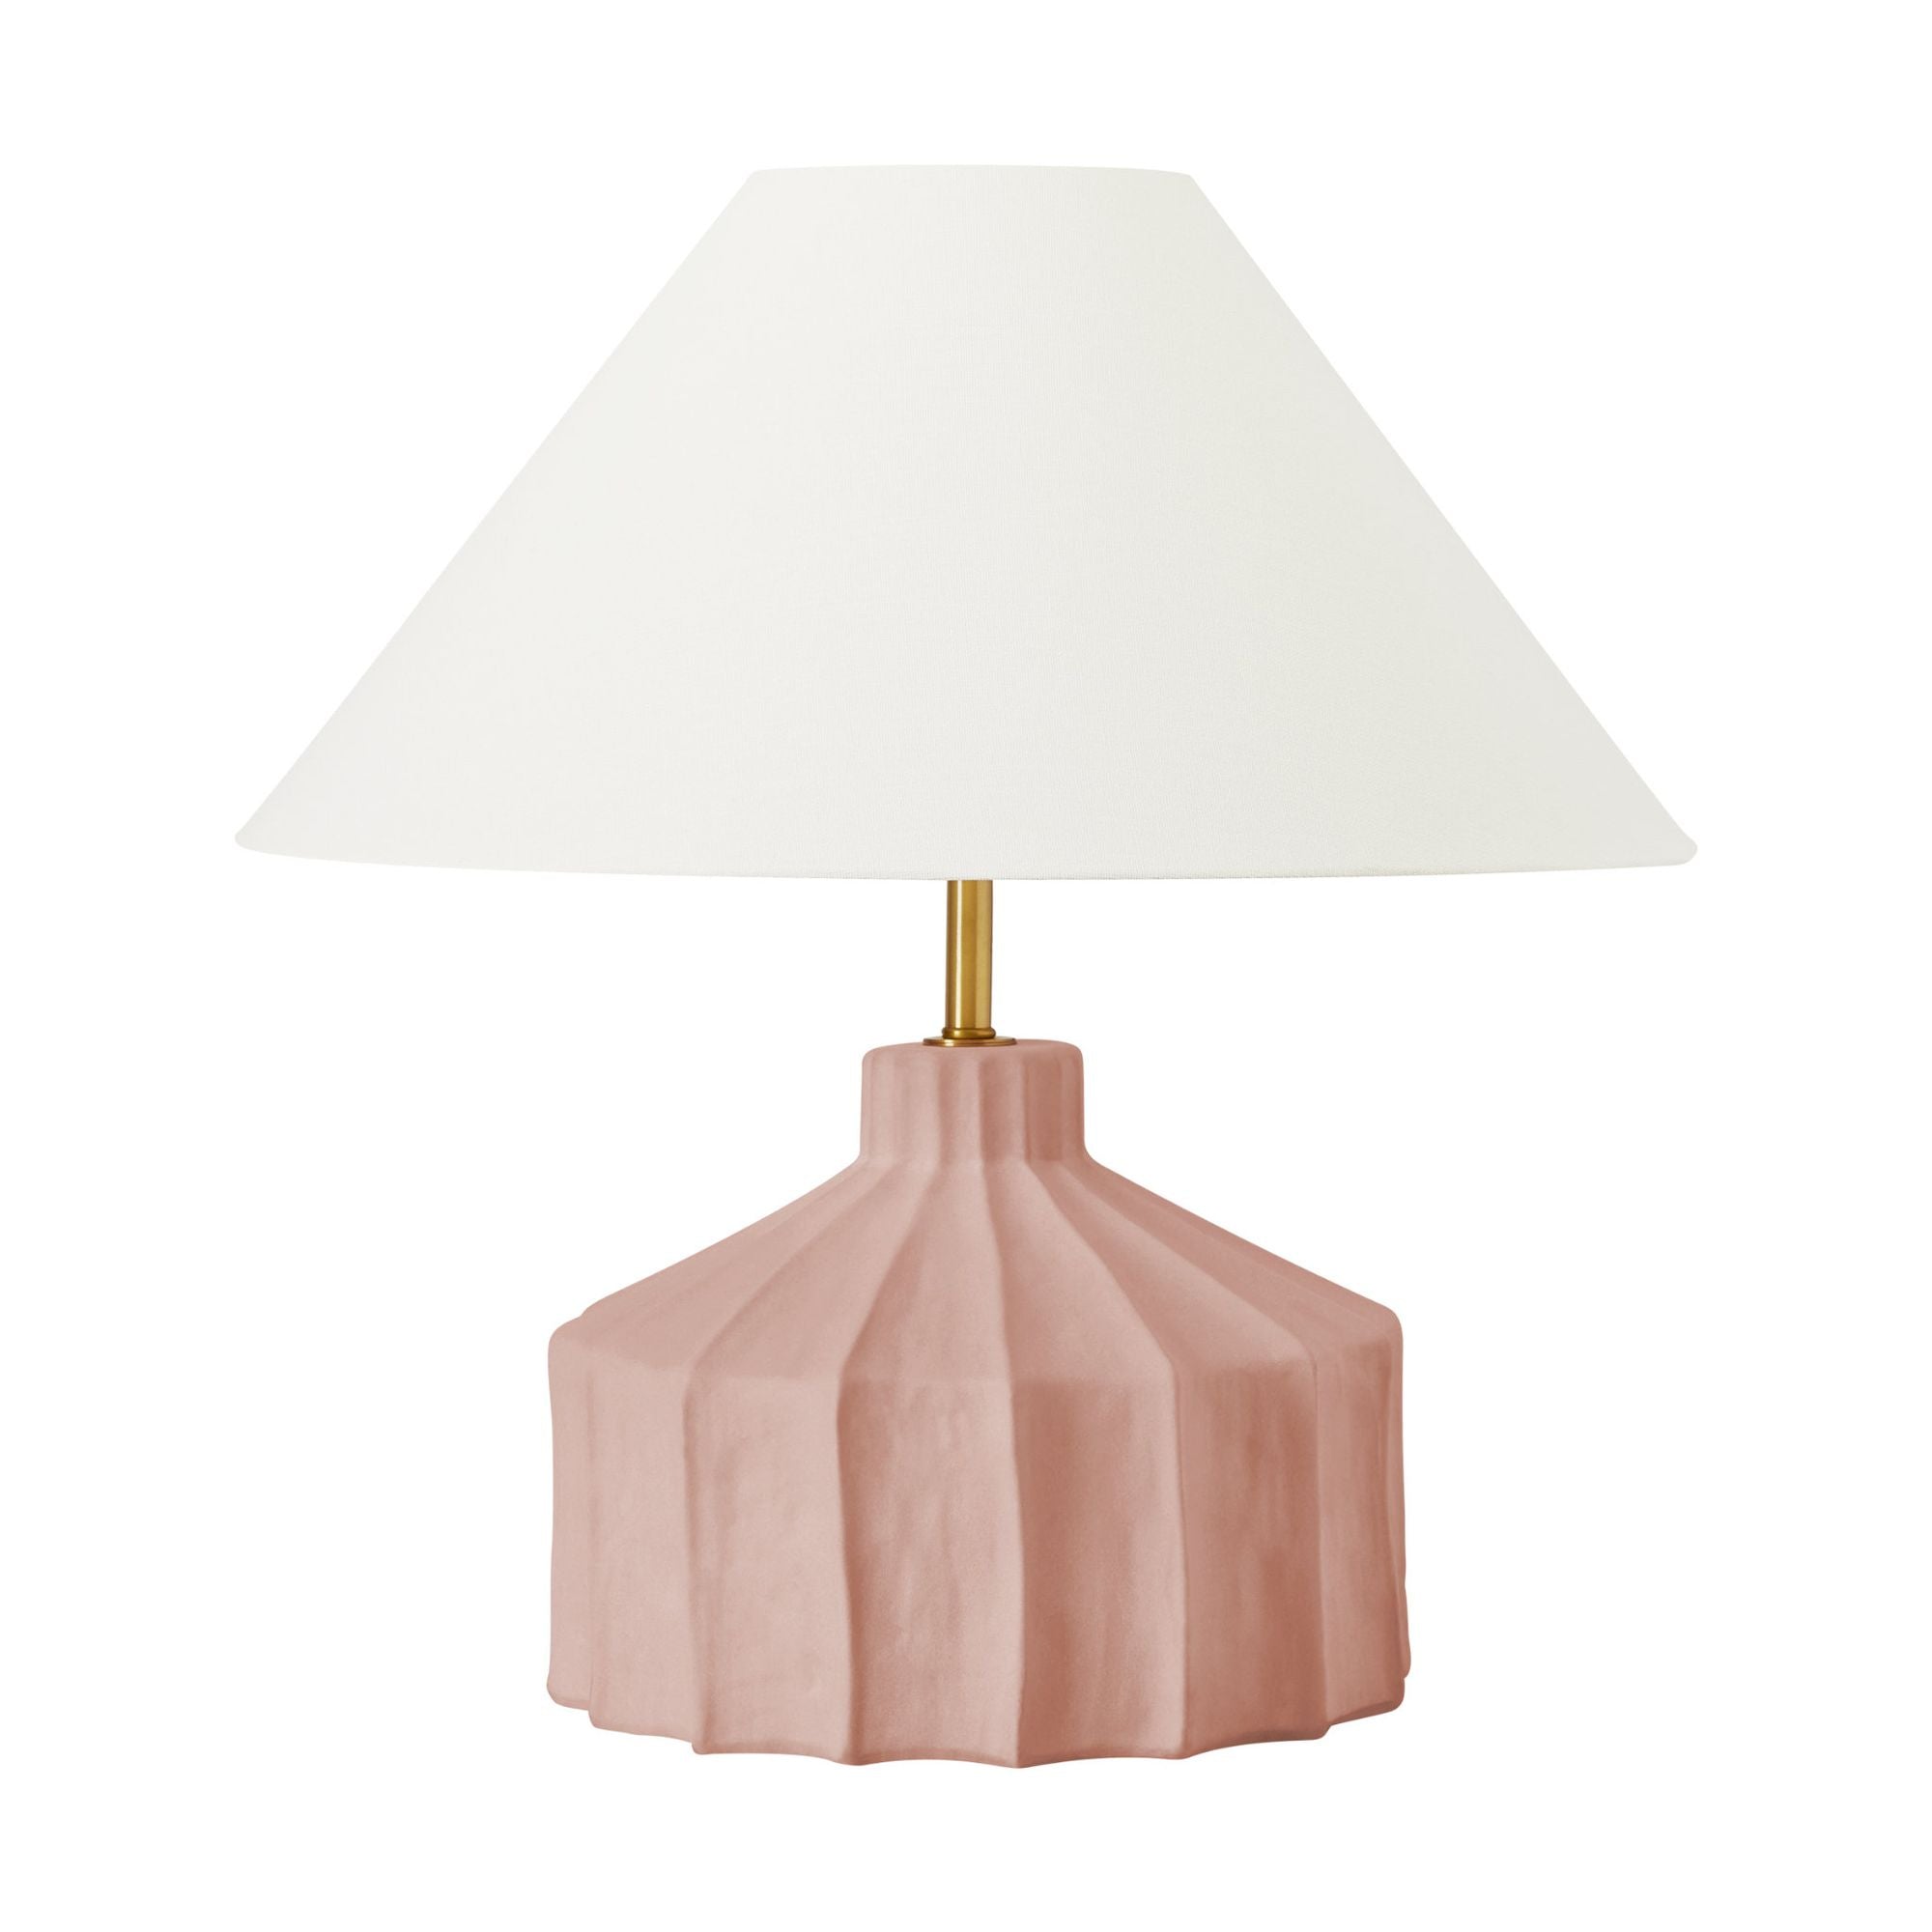 Kelly Wearstler Veneto Medium Table Lamp in Dusty Rose